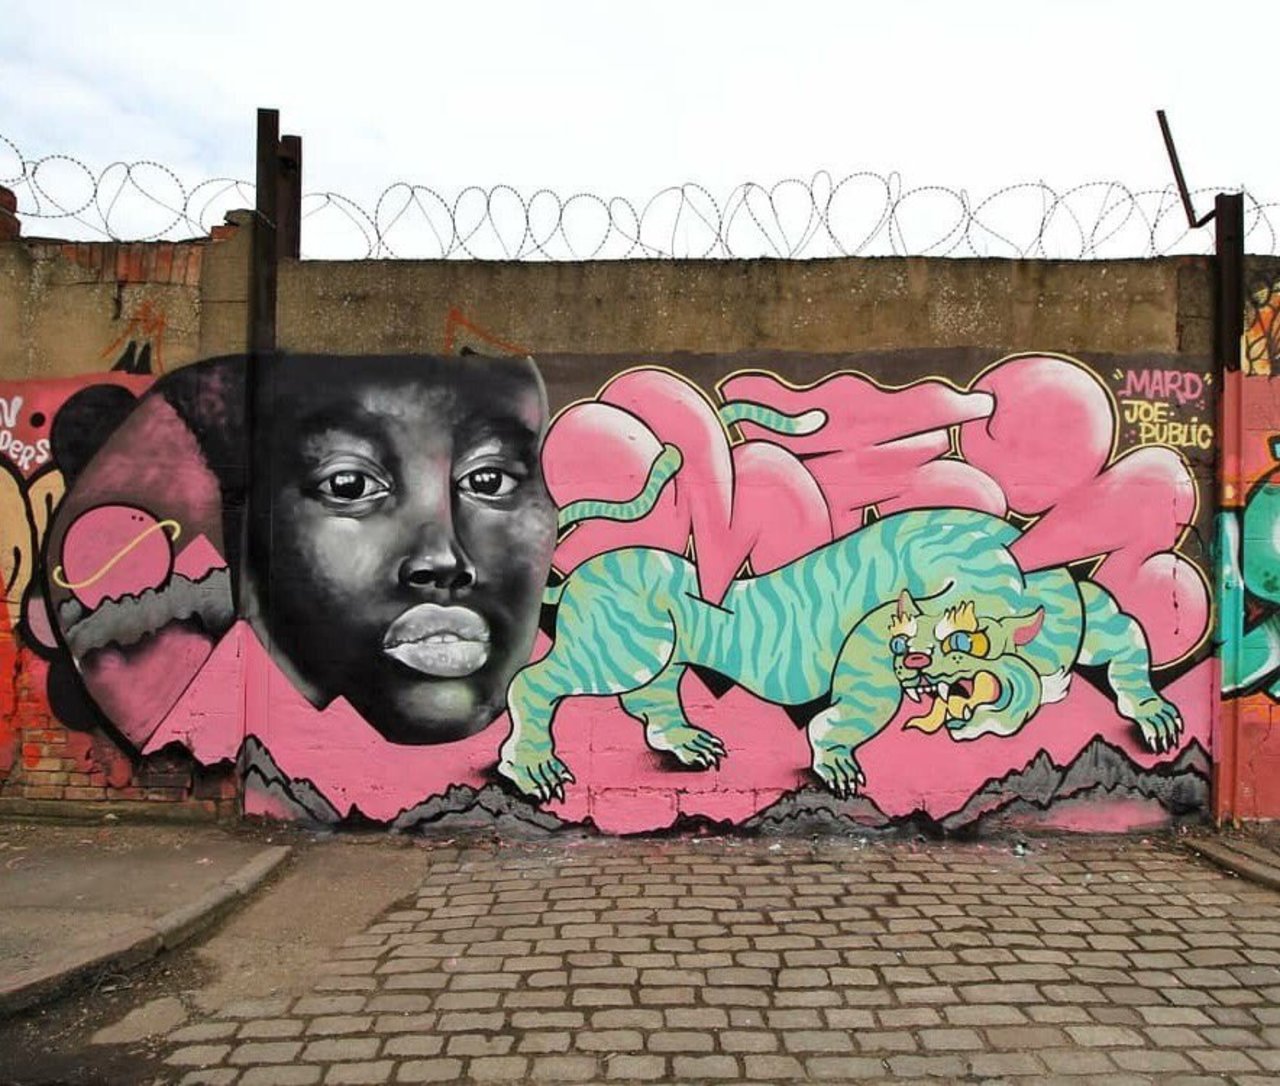 Fresh piece by Mard on the Longbone legal wall near @whalebonehull - stunner  #hull #streetart #graffiti https://t.co/BbA1ecXMf6